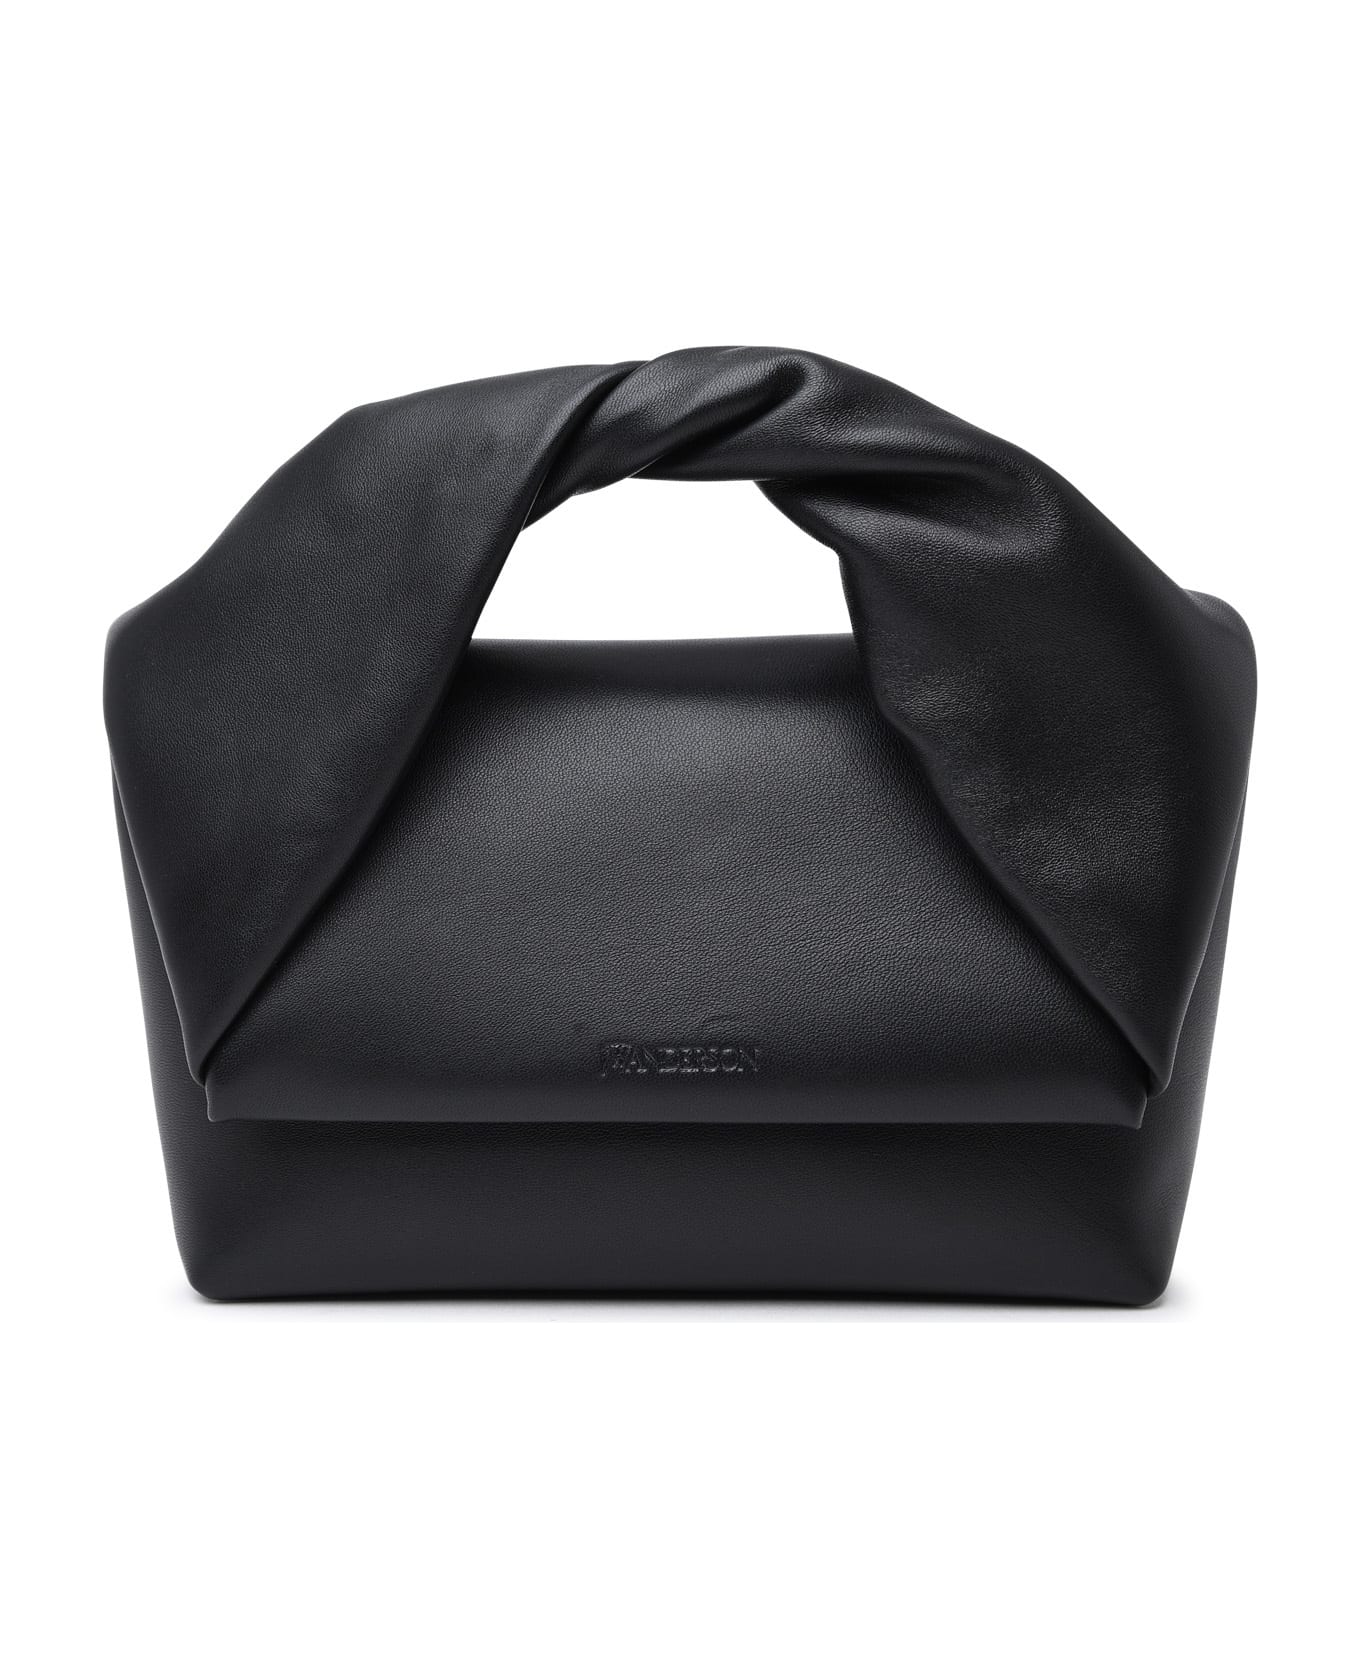 J.W. Anderson Black Leather Bag - Black